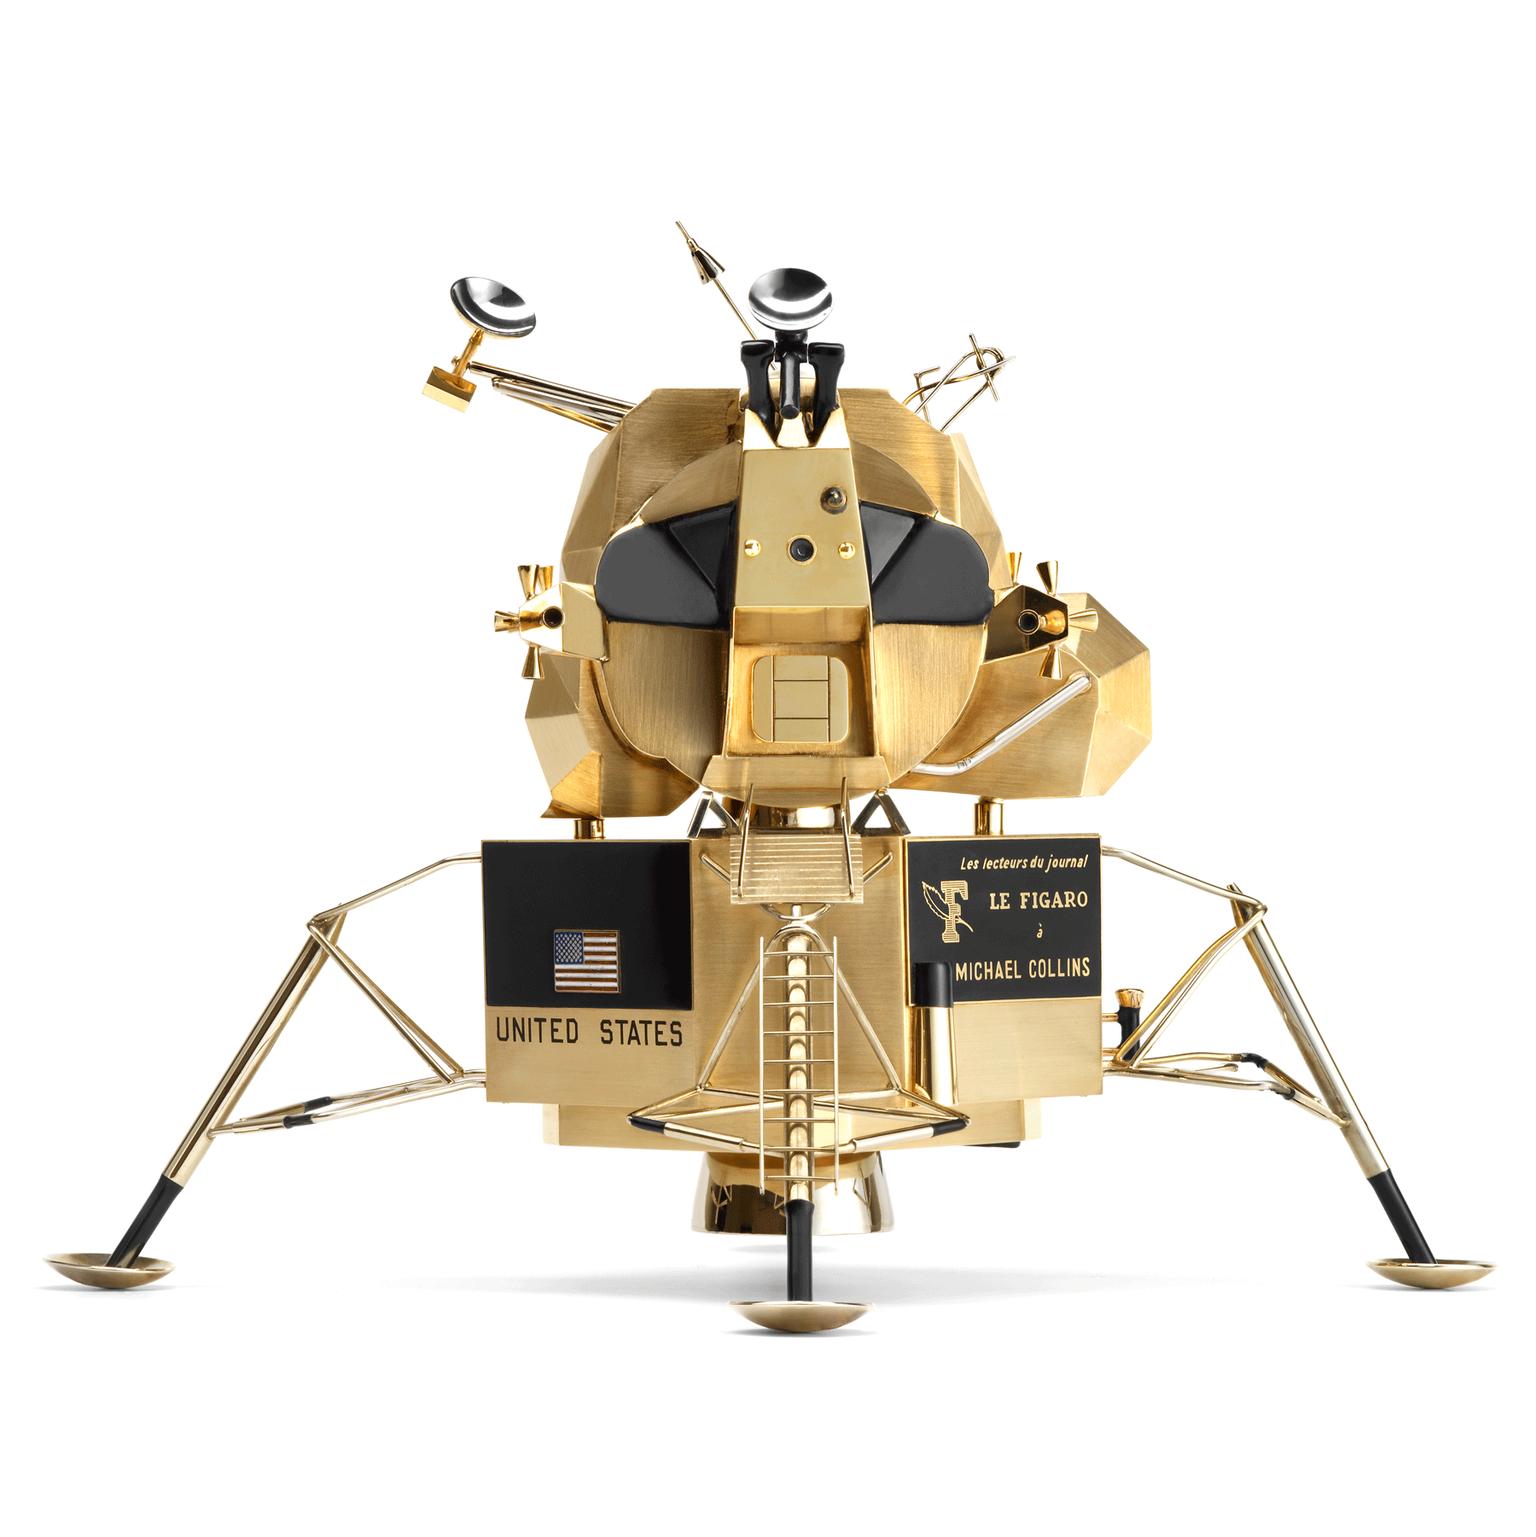 Cartier Lunar Excursion Module replica